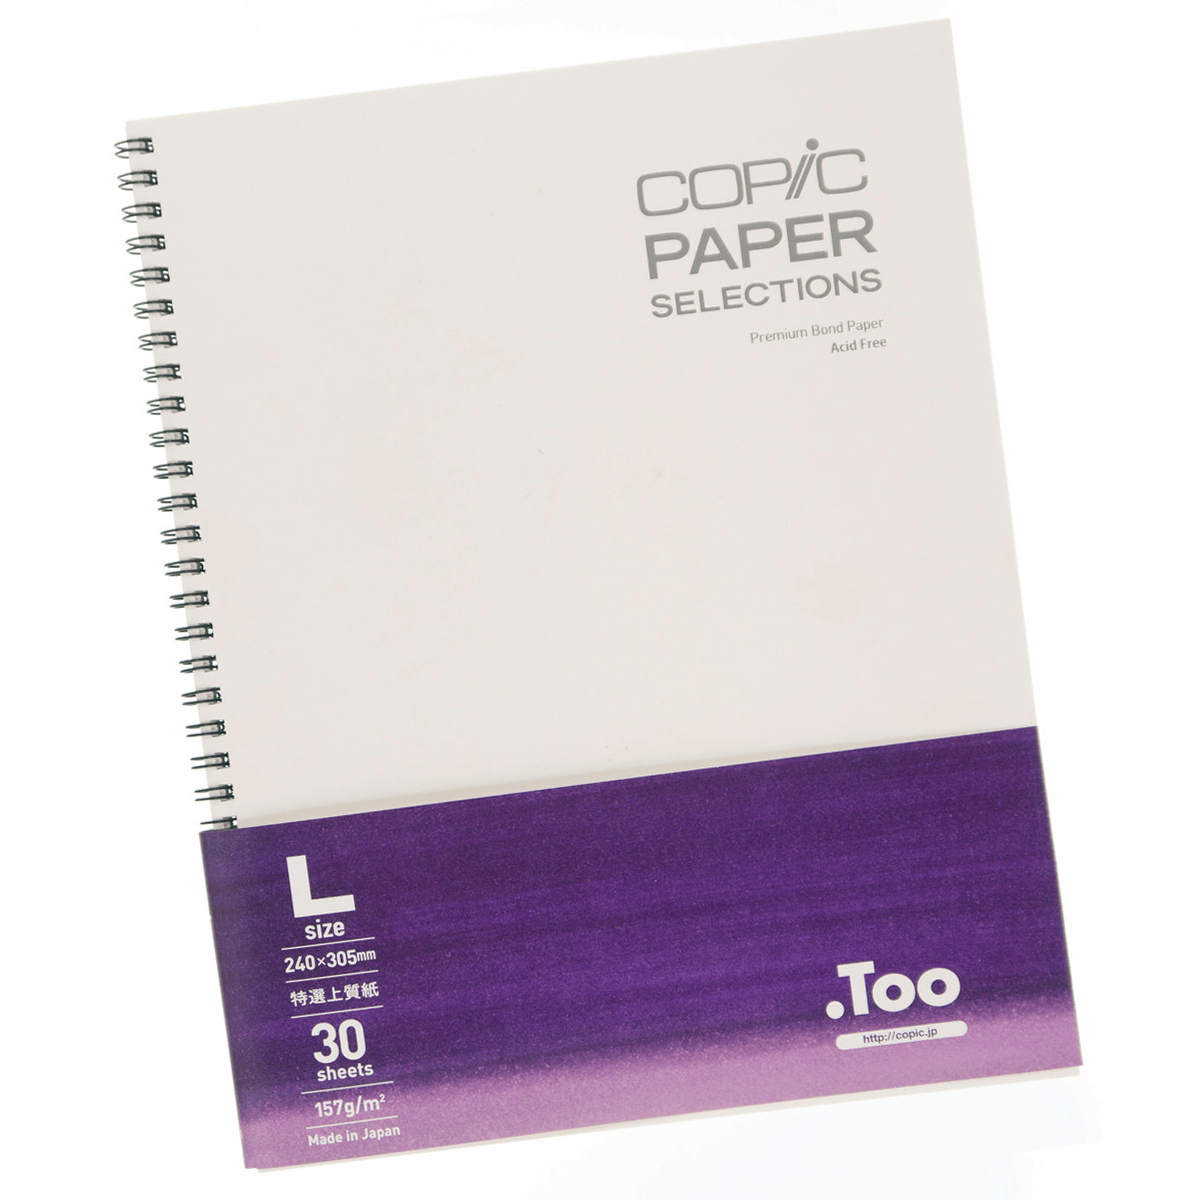 copic-paper-selections-cuaderno-bond-24-x-305-cm-30-hojas-157-grm2